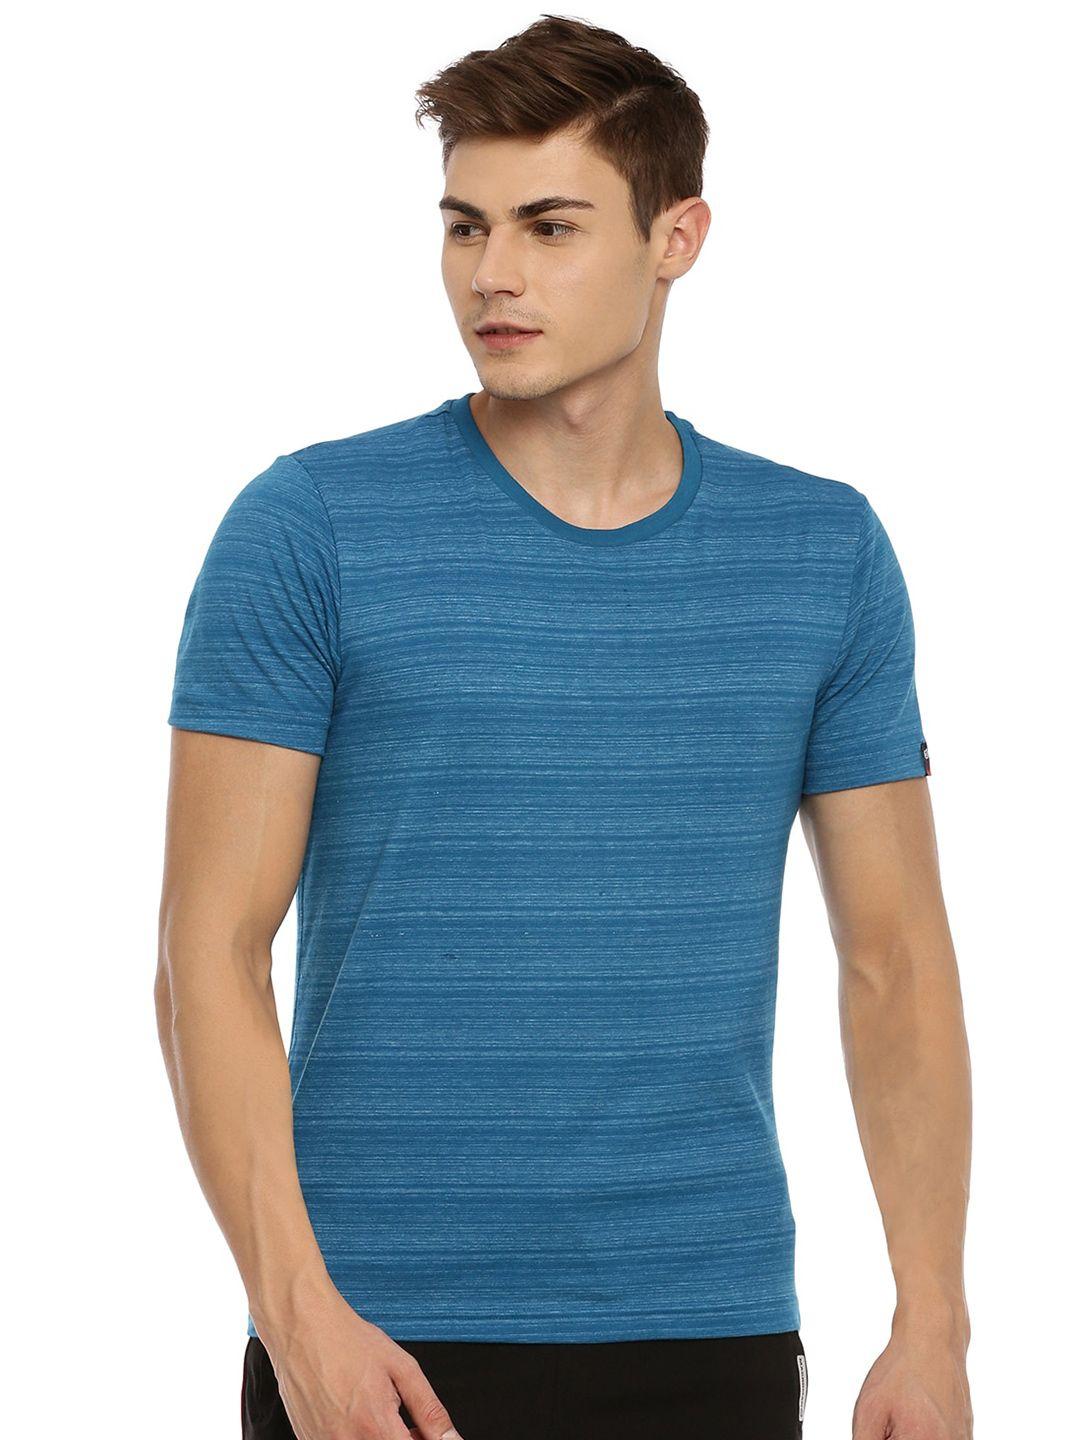 macroman m-series striped round neck cotton sports t-shirt